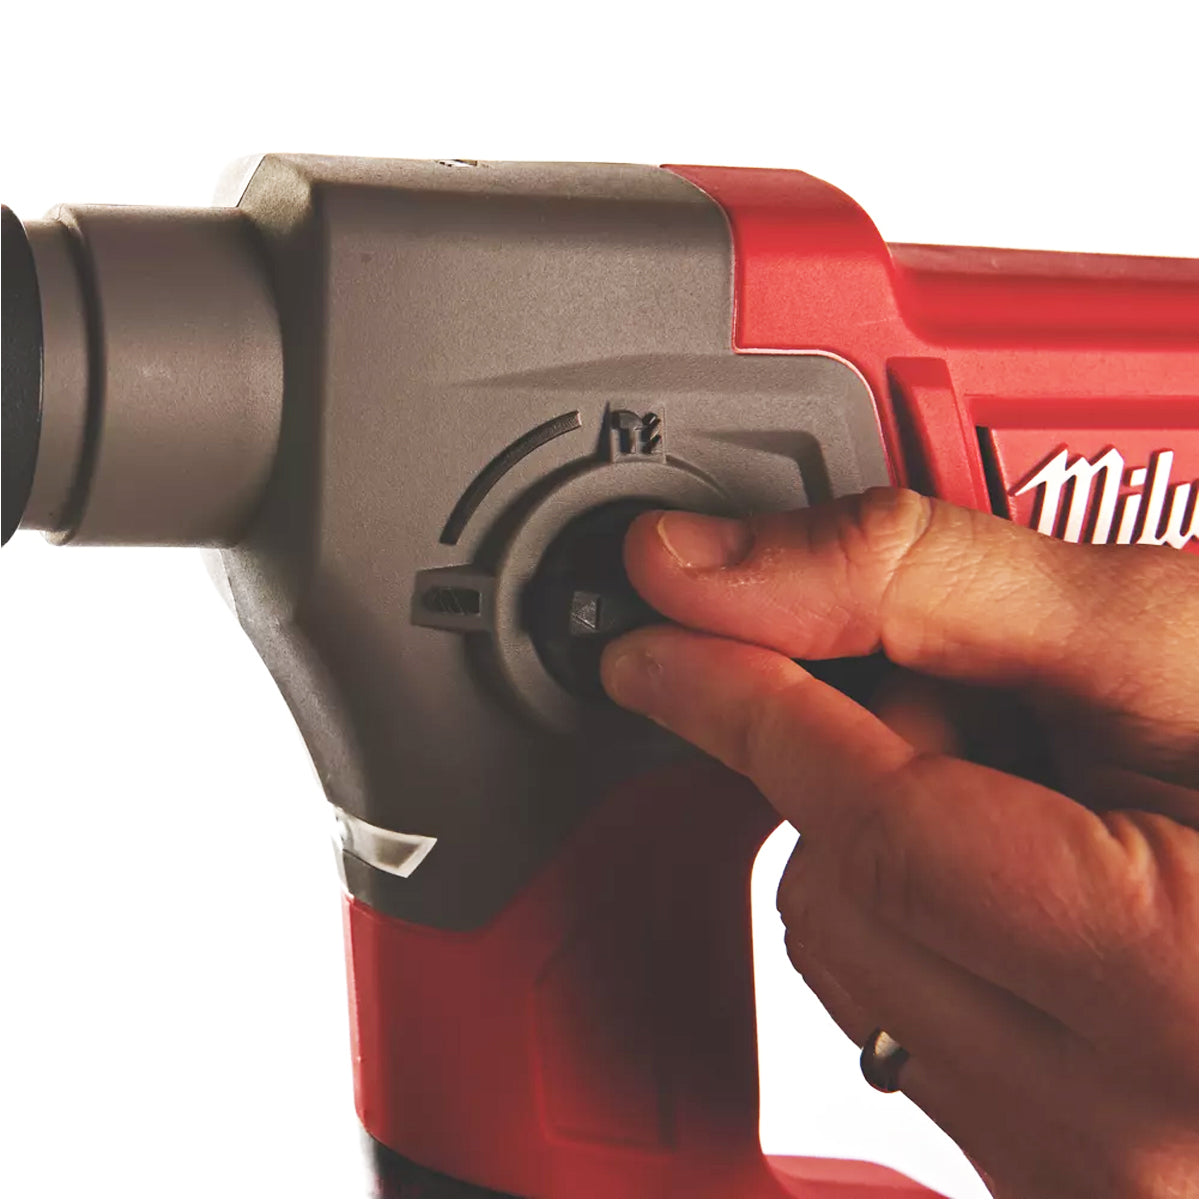 Milwaukee M12CH-0 12V Brushless SDS+ Hammer Drill Body Only 4933441947